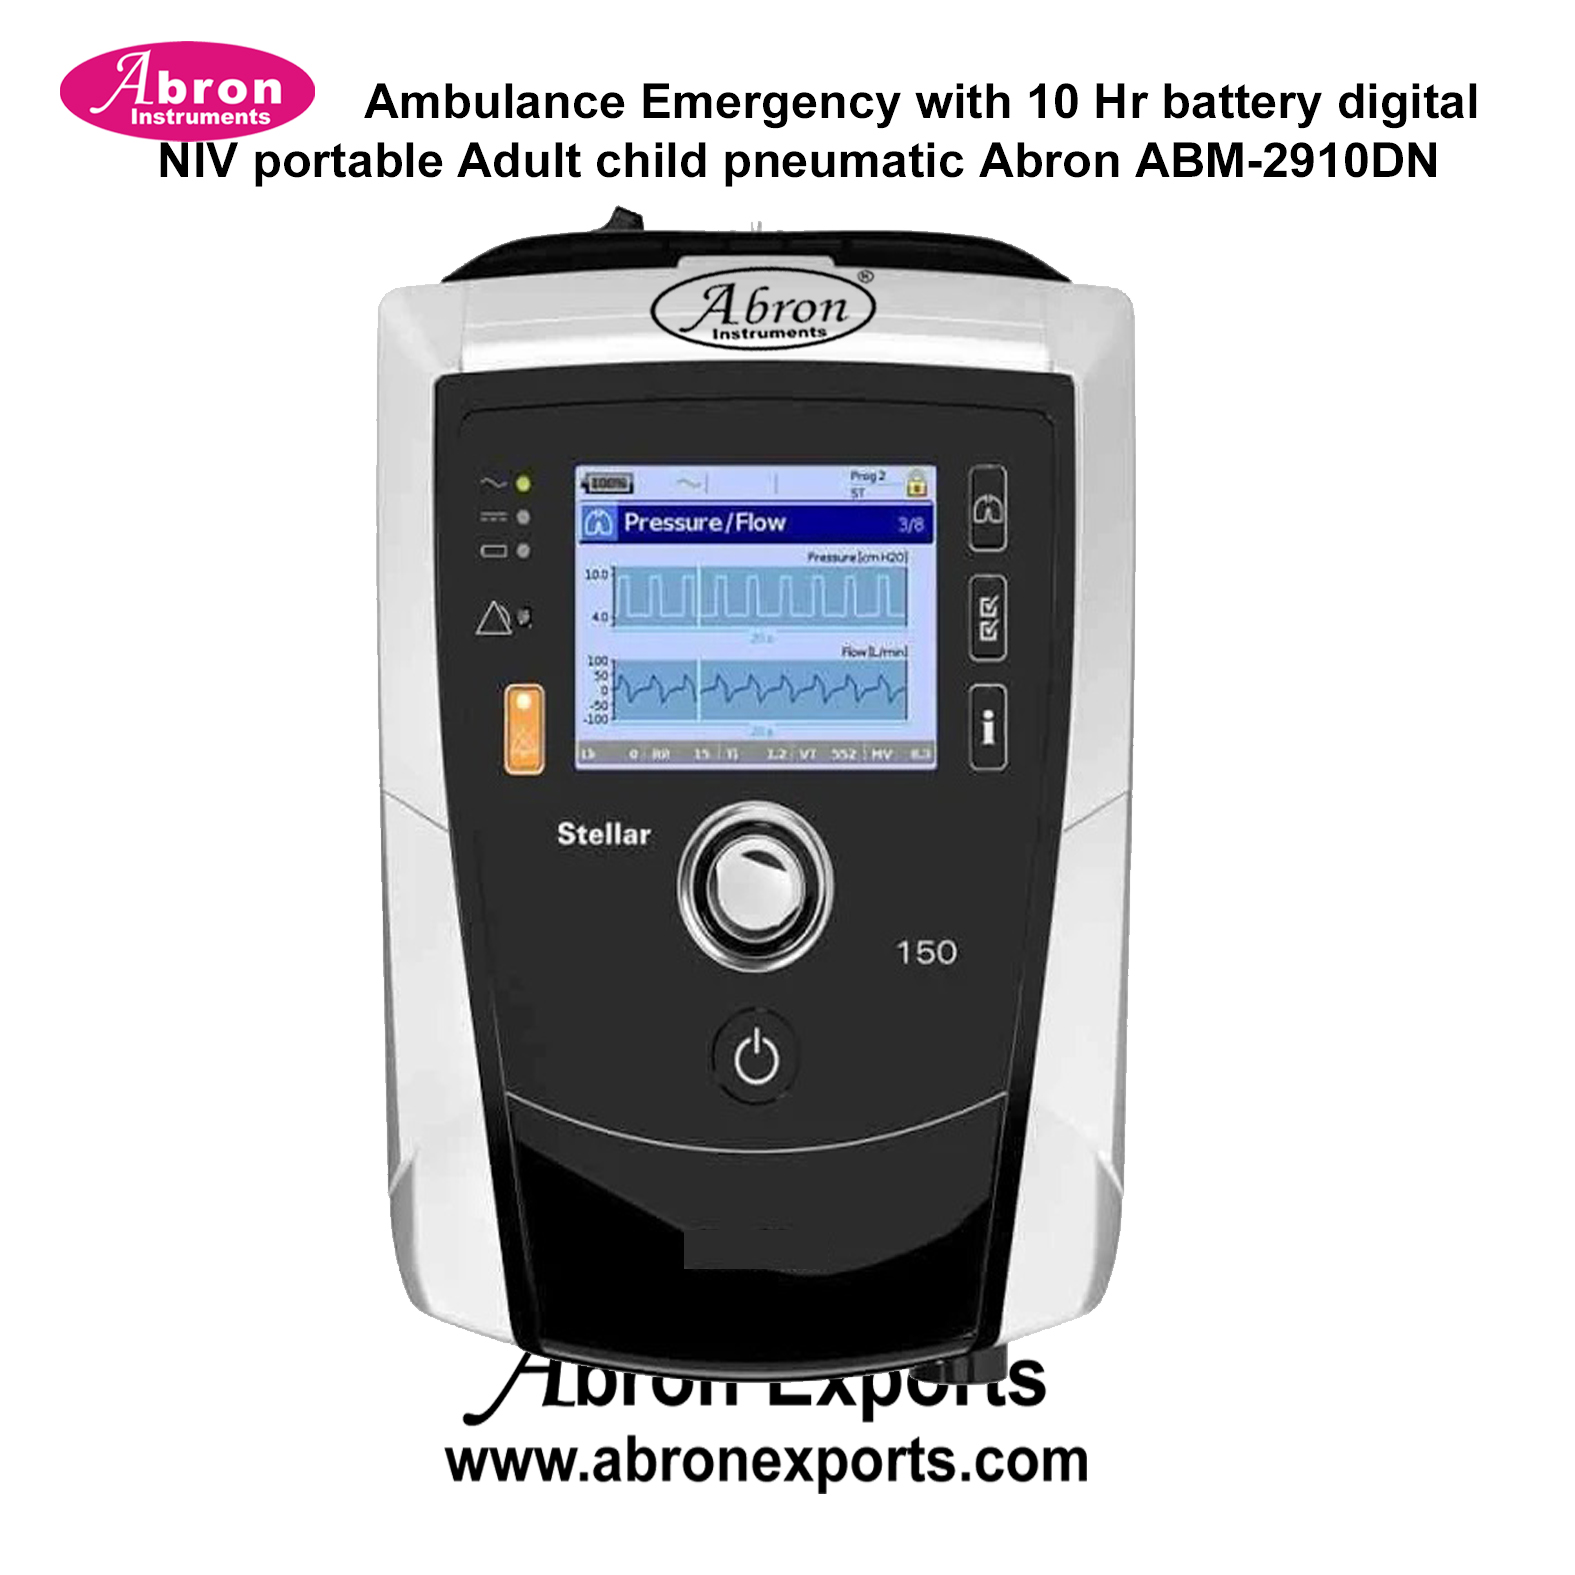 Vantilator Ambulance Emergency with 10 Hr Battery Digital NIV Portable Adult Child Pneumatic Hospital Nursing Home Abron ABM-2910DN 